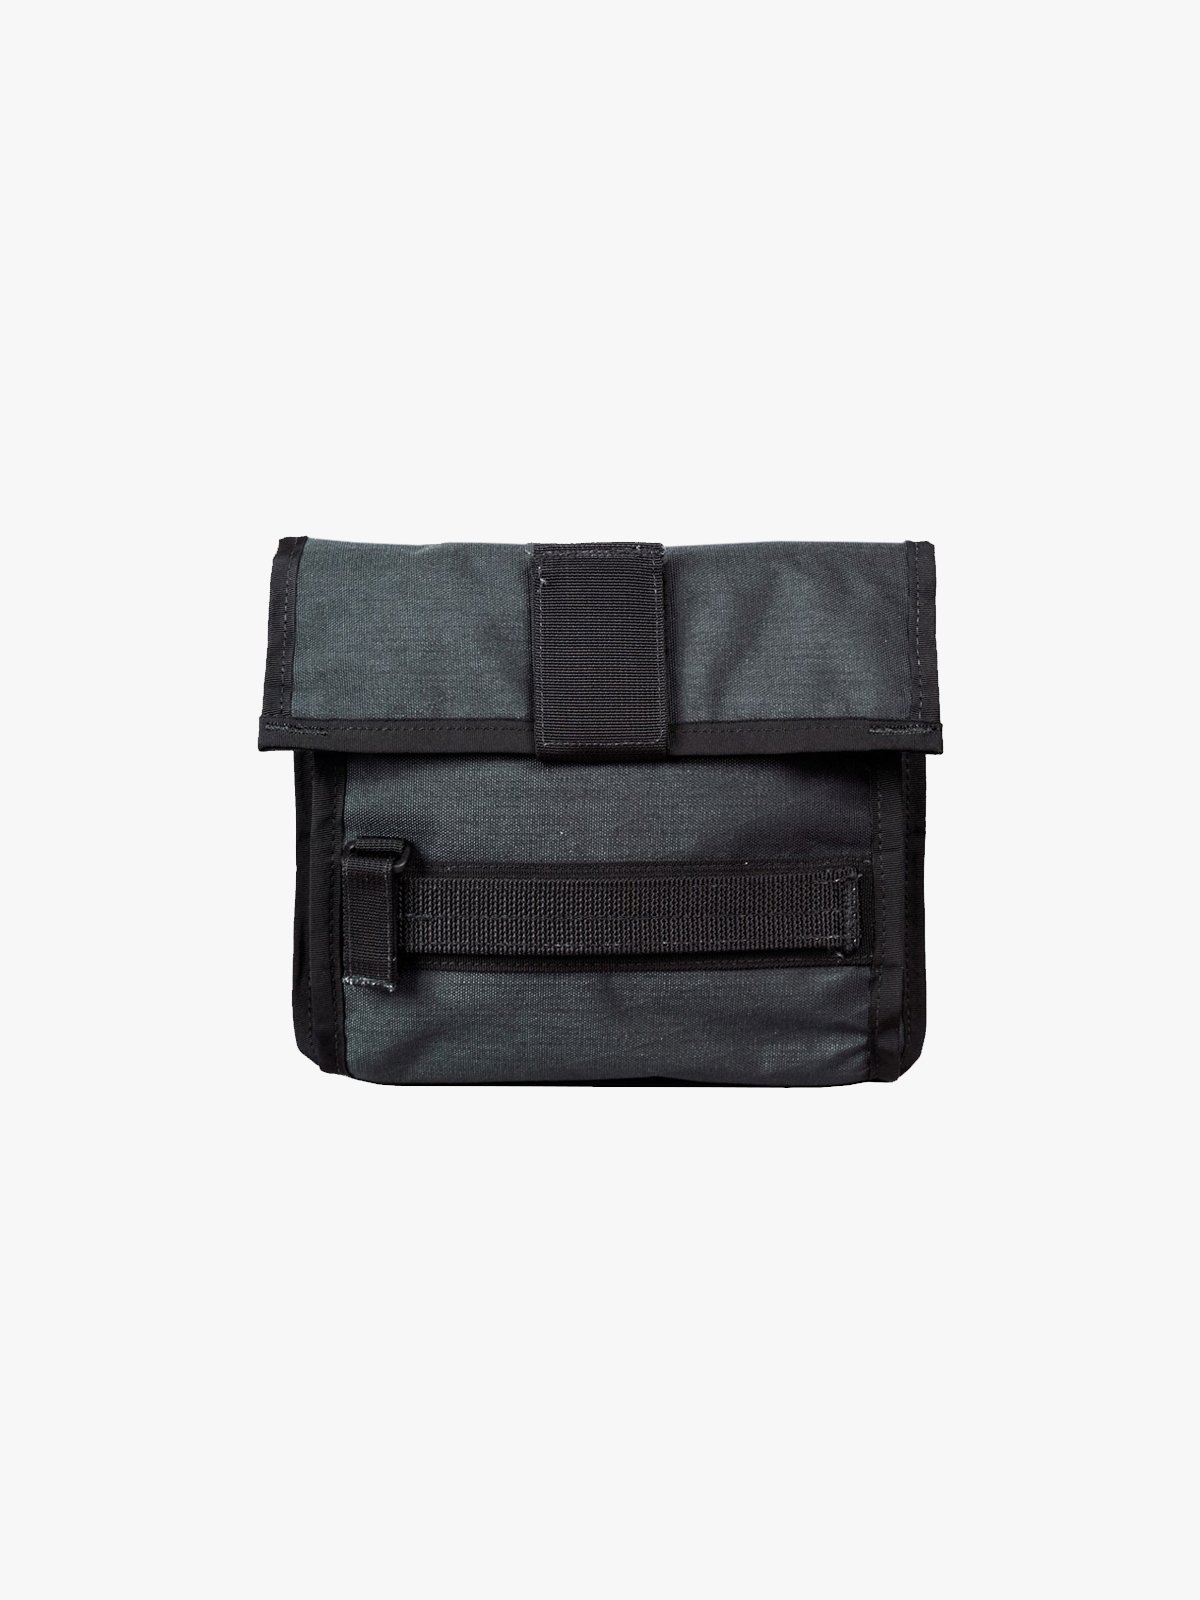 Arkiv Tool Pocket by Mission Workshop - Weatherproof Bags & Technical Apparel - San Francisco & Los Angeles - Built to endure - Guaranteed forever